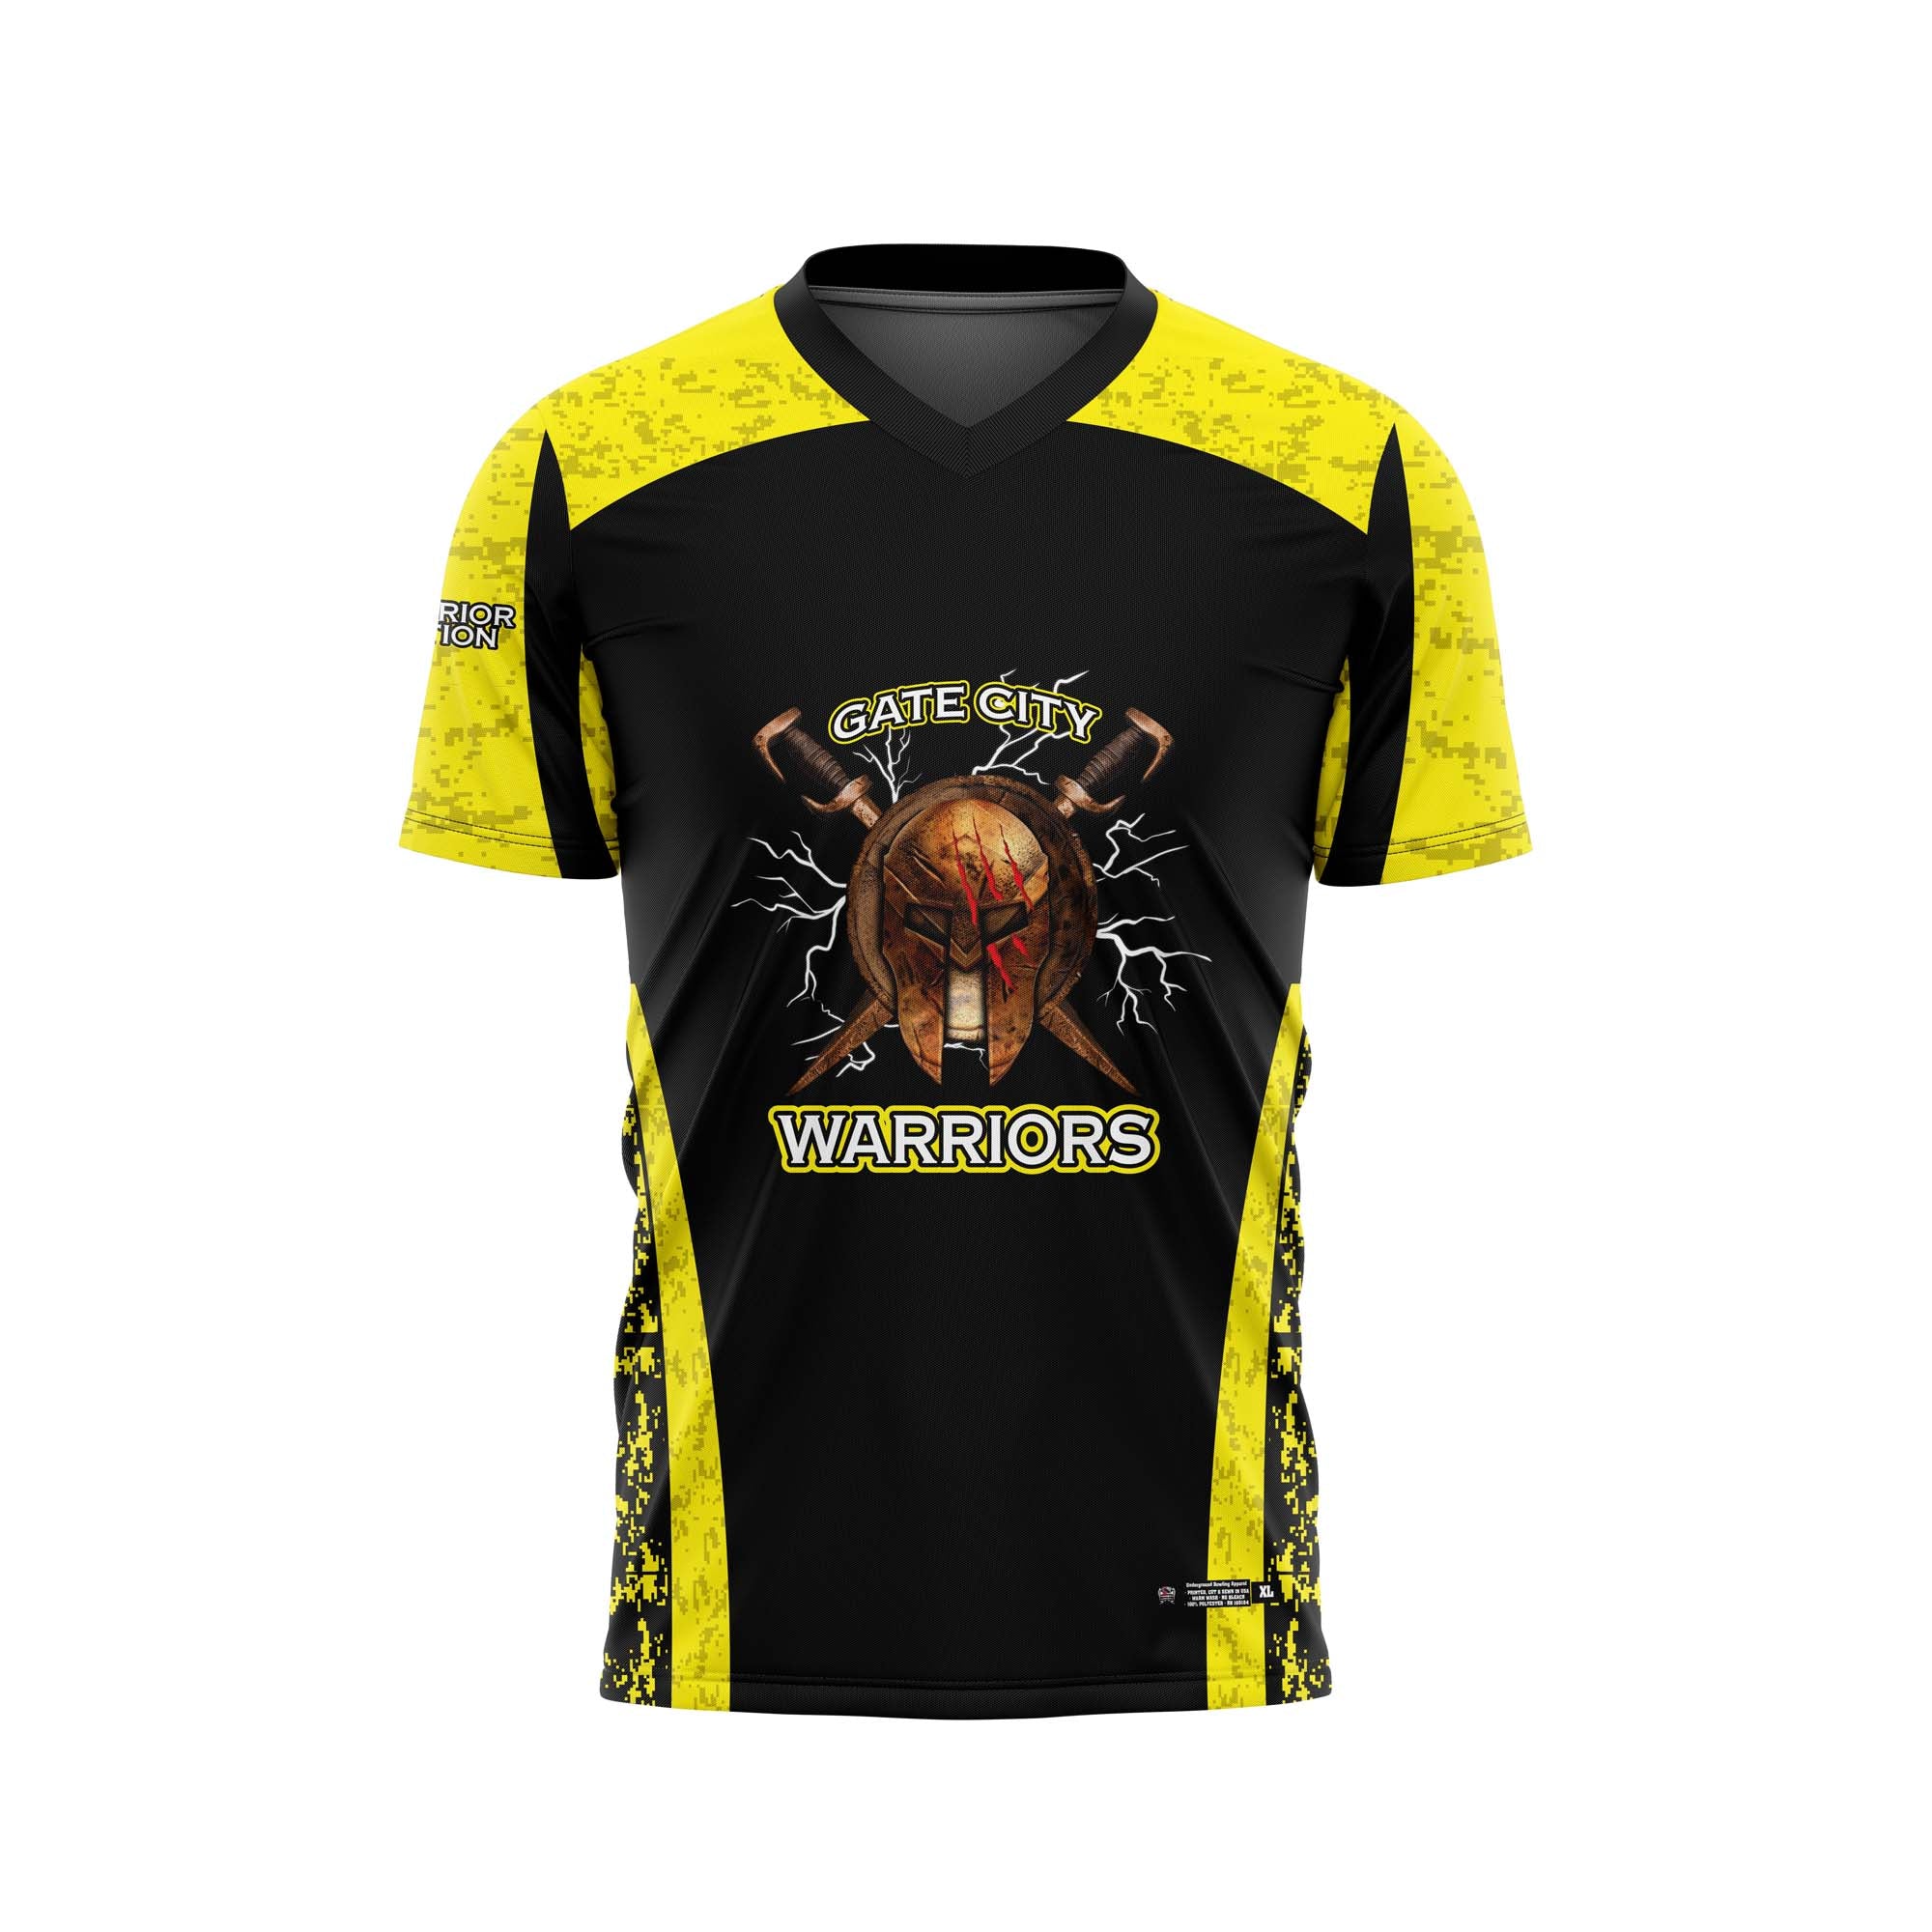 Gate City Warriors Black & Yellow Jersey